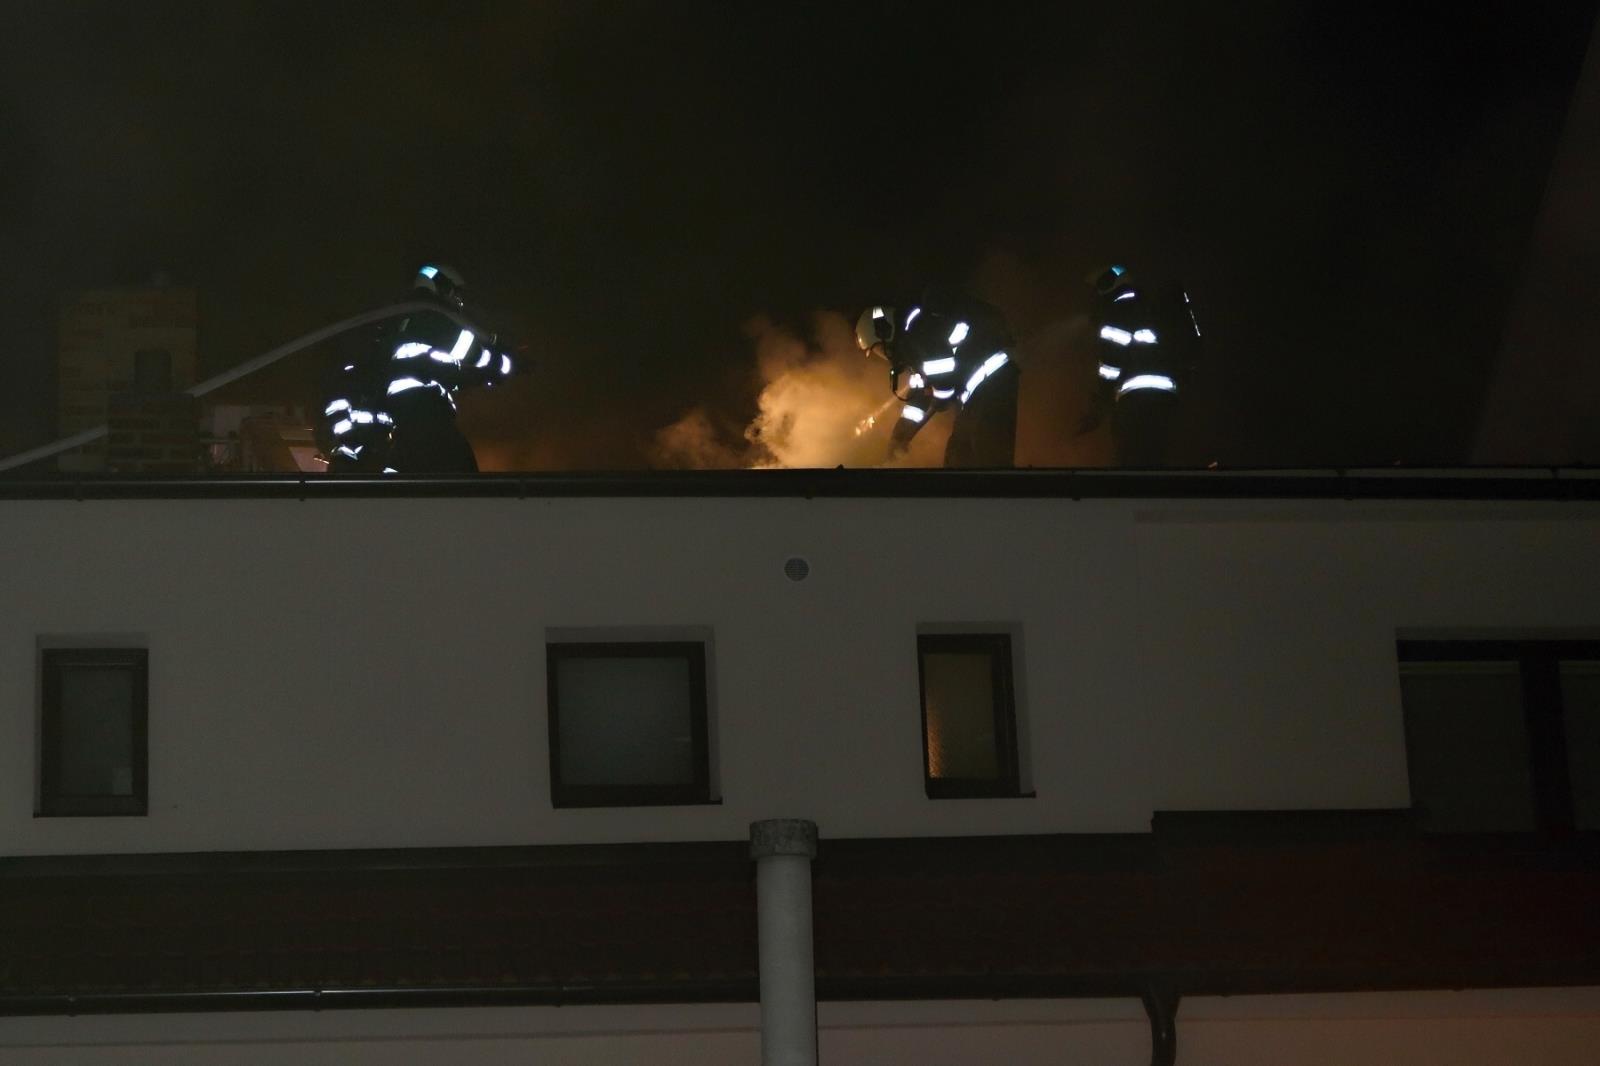 Požár střechy, Sezimovo Ústí - 12. 9. 2017 (1).jpg